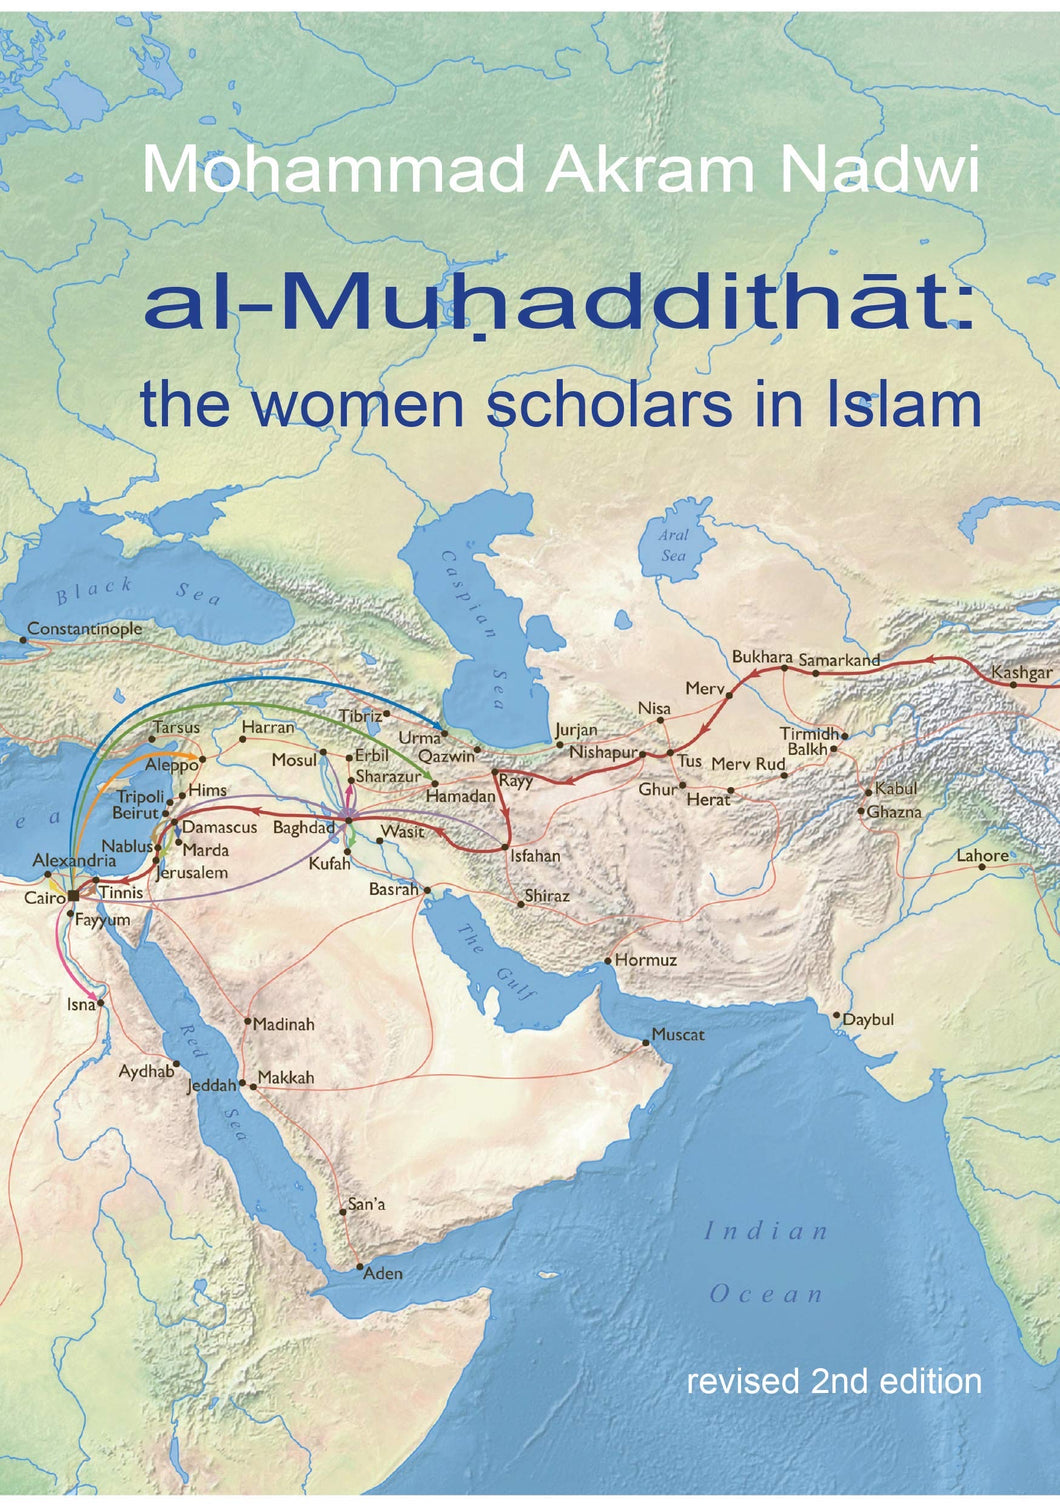 al-Muhaddithat: the women scholars in Islam